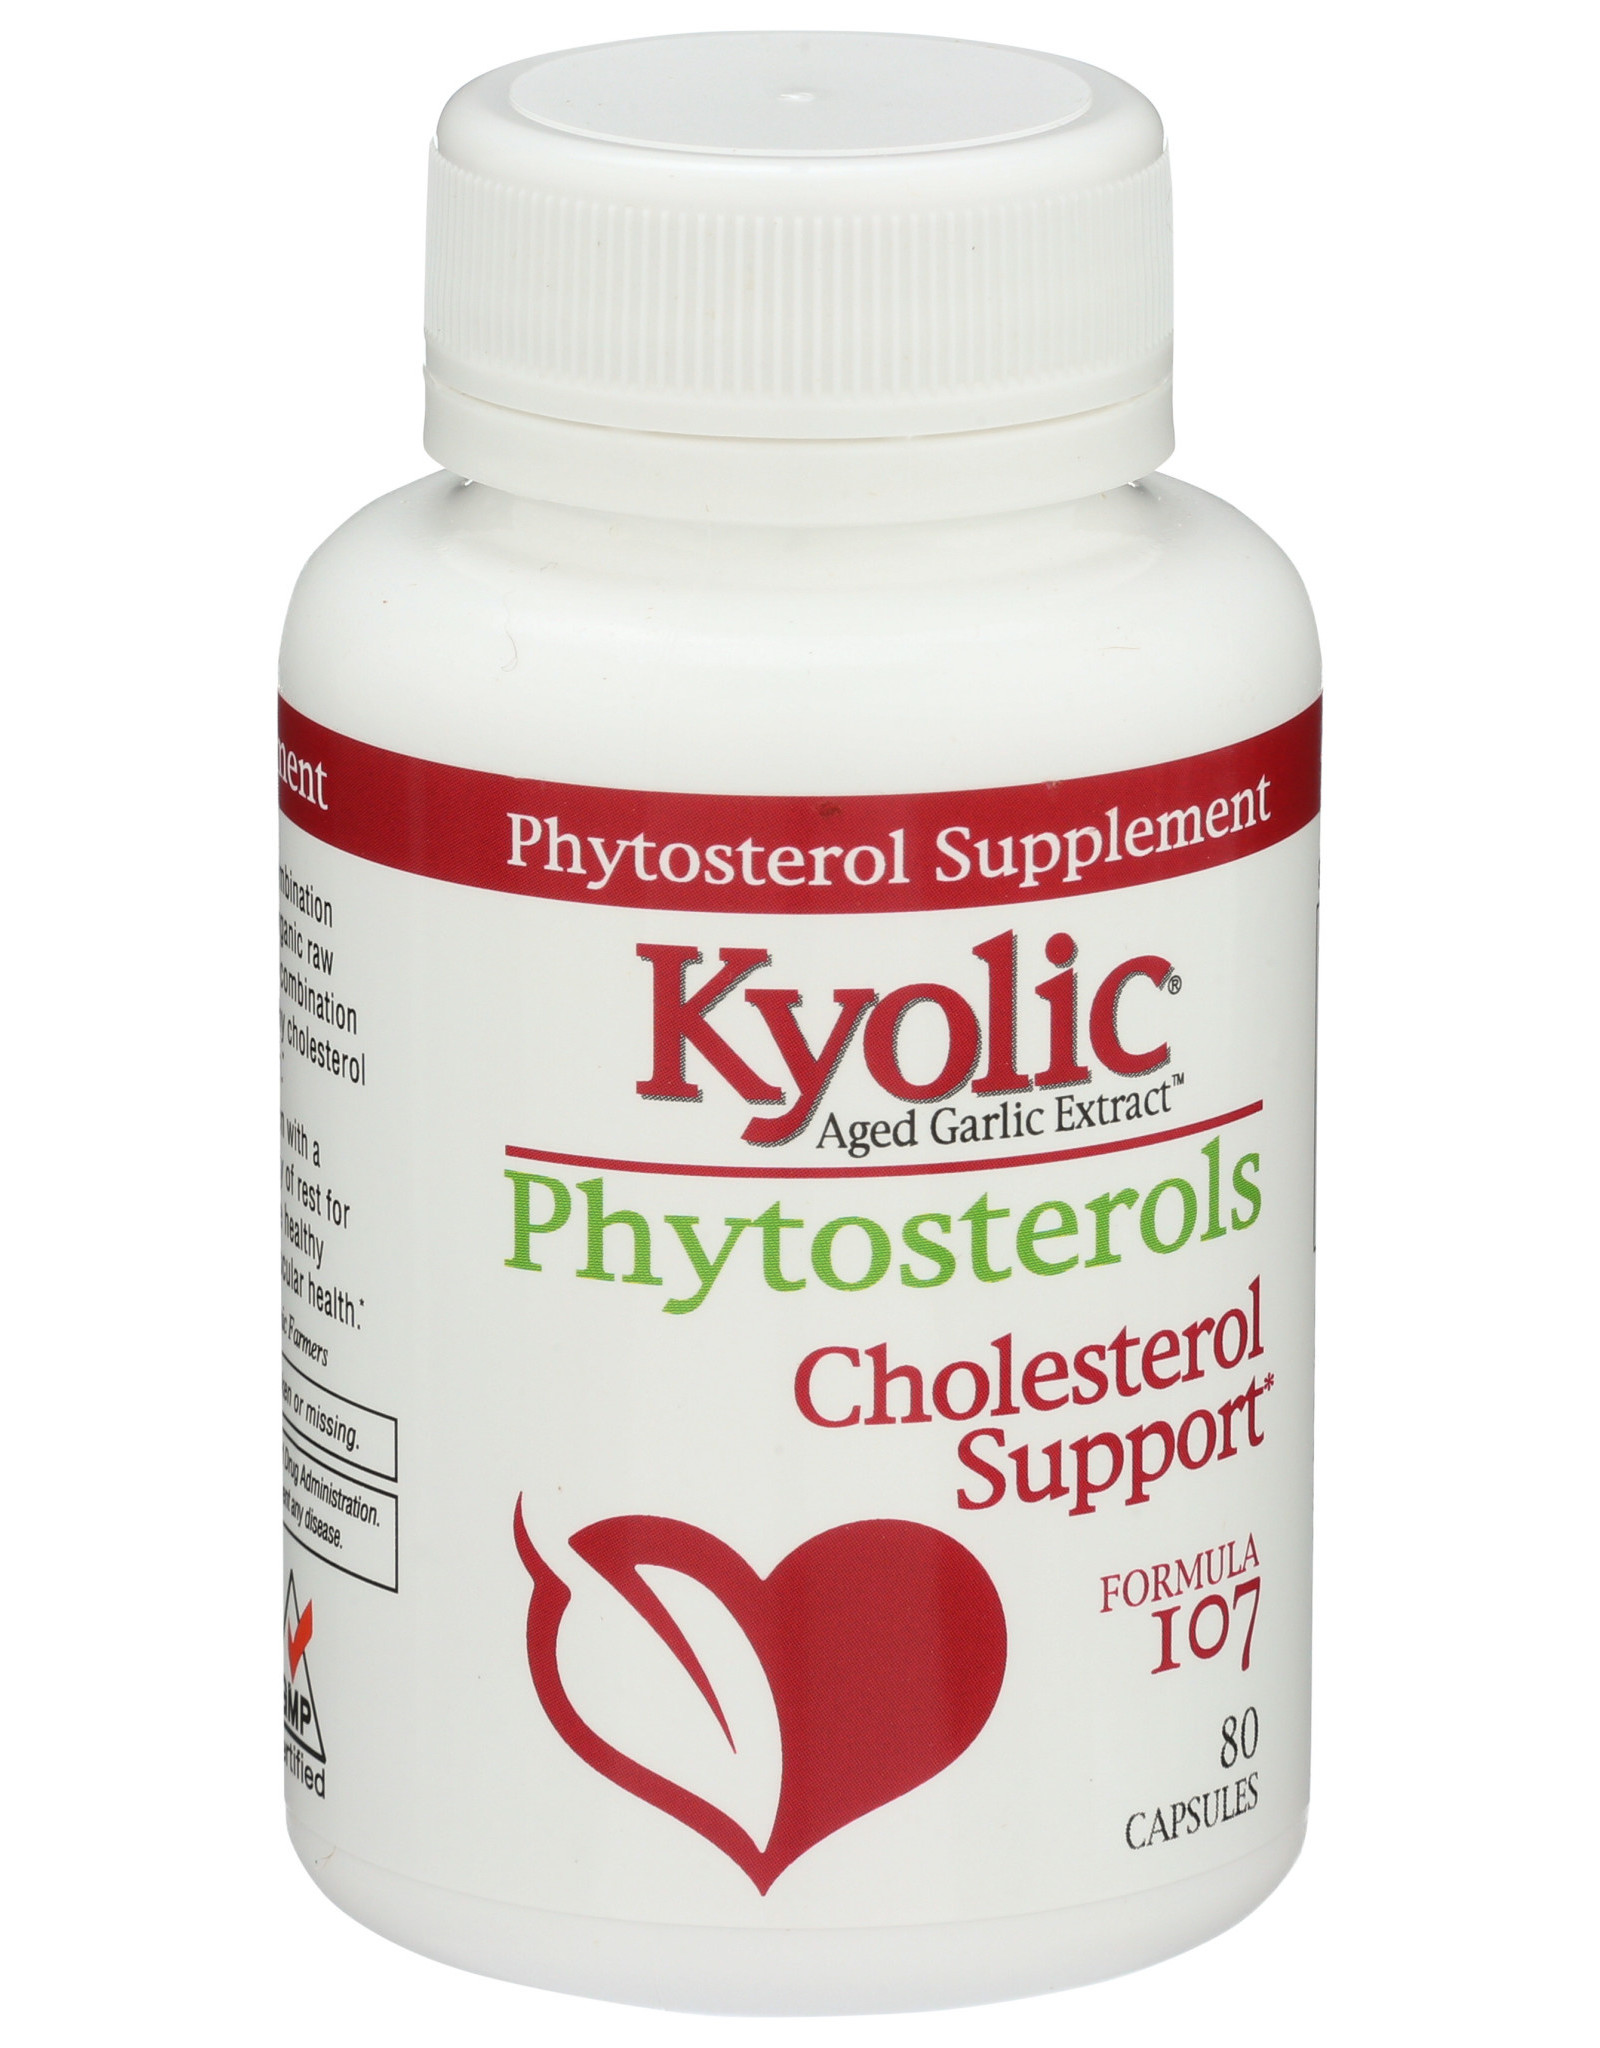 KYOLIC X Kyolic Phytosterois Formula 107 80 Capsules